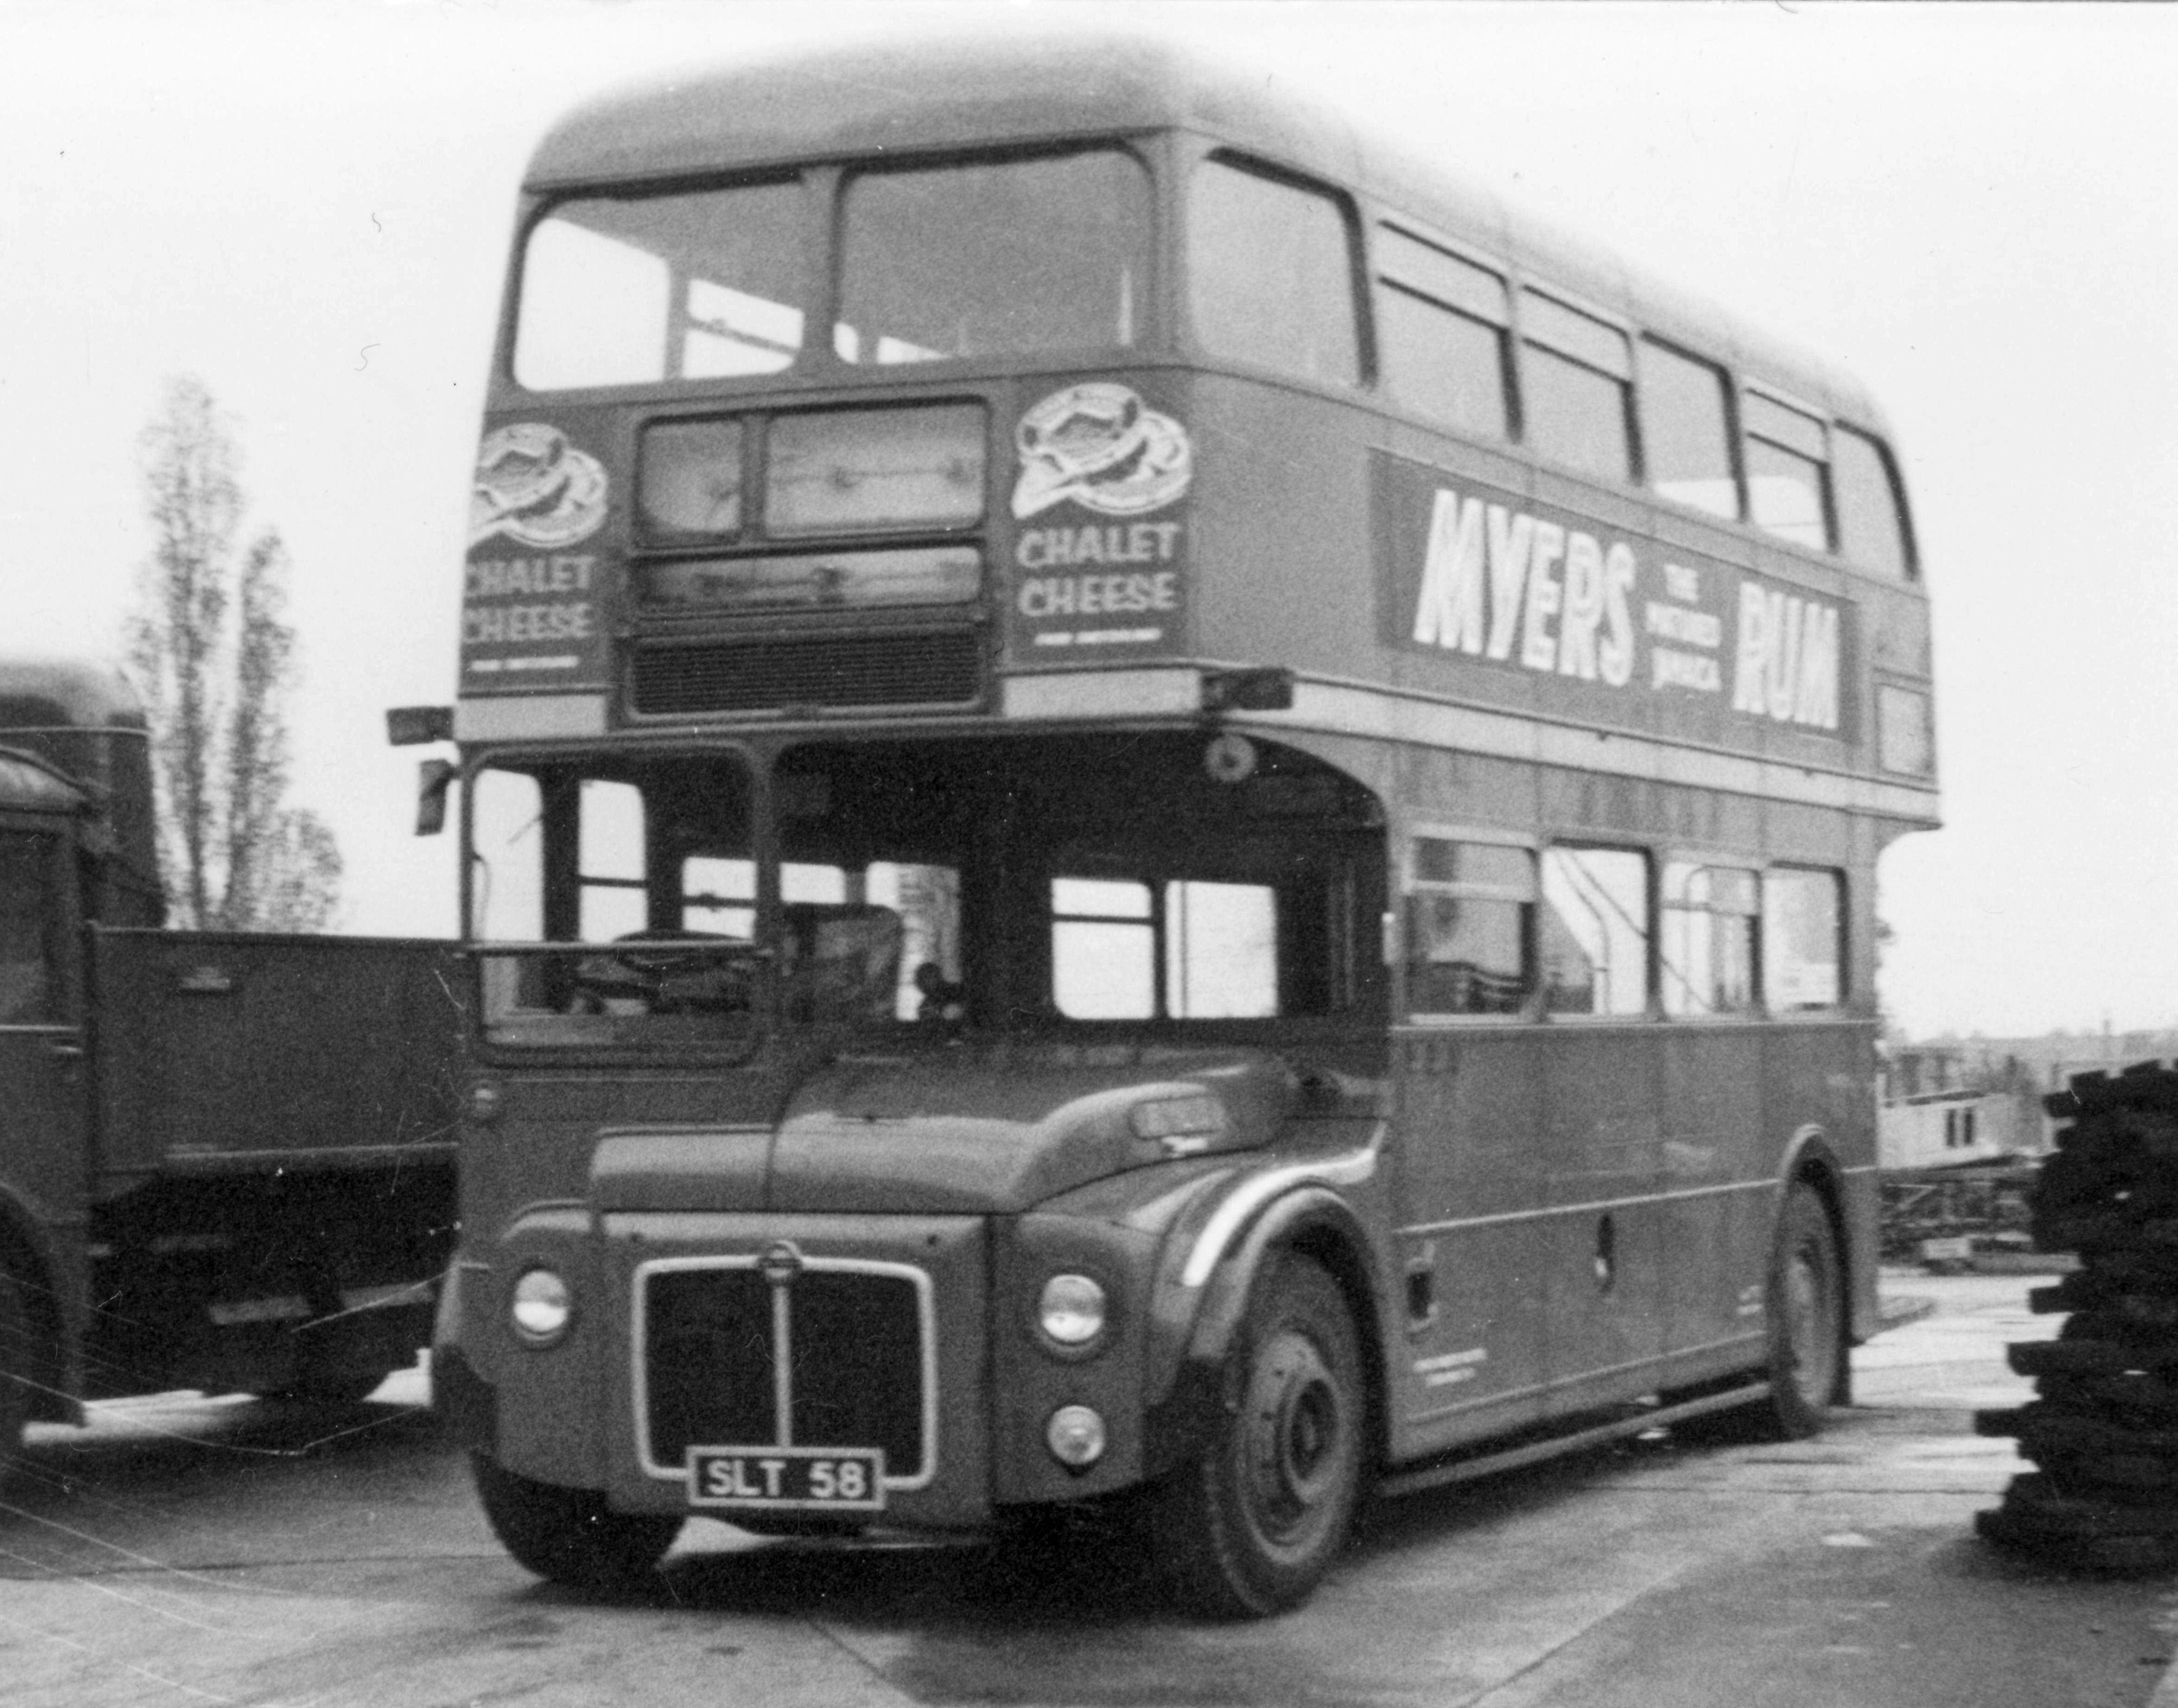 1957-routemaster-prototype-bus-london